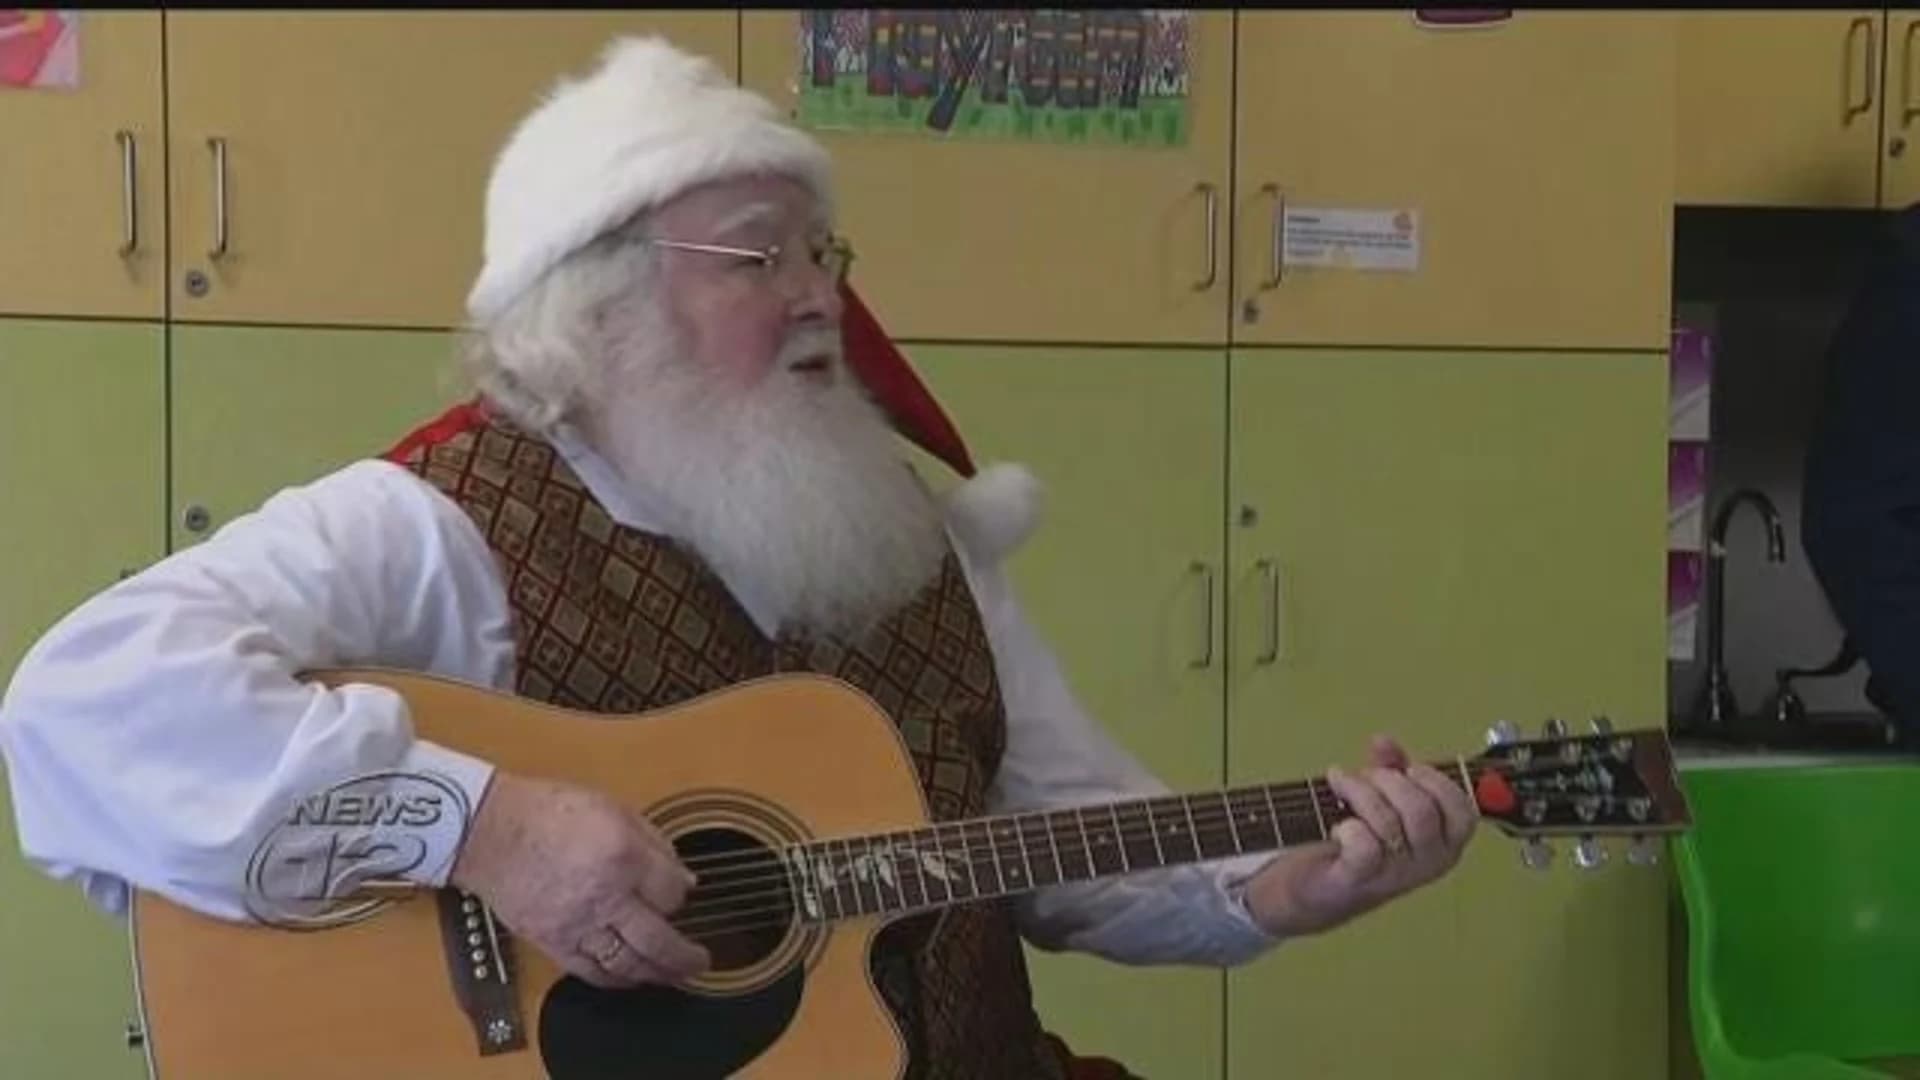 Santa visits pediatric hospital patients, sings holiday classics